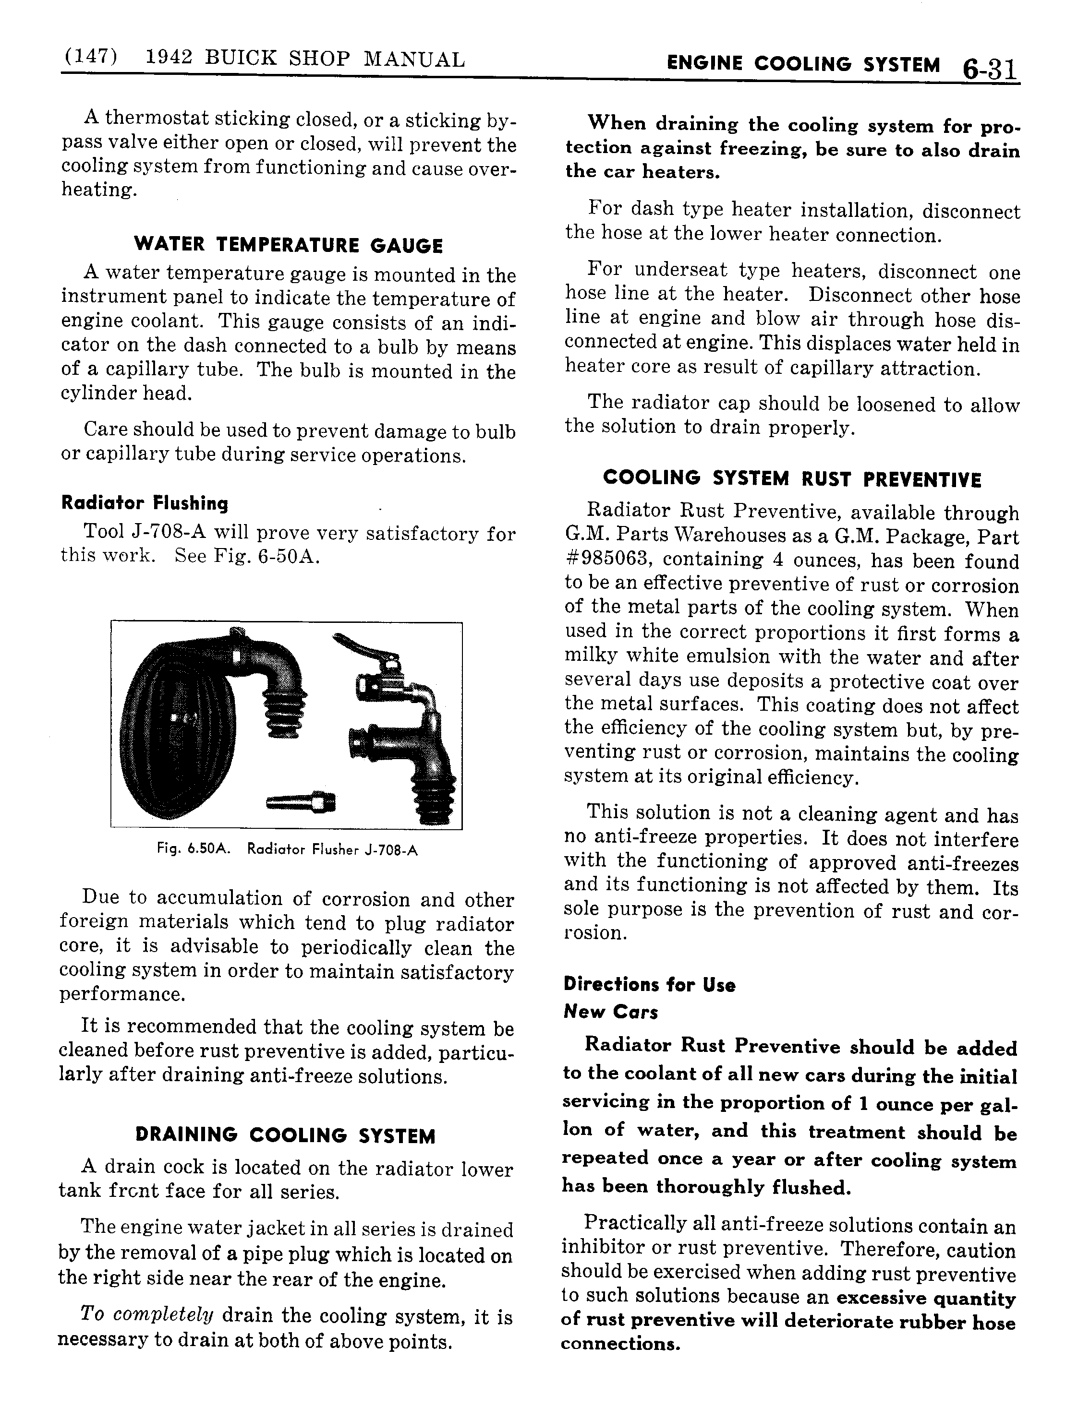 n_07 1942 Buick Shop Manual - Engine-031-031.jpg